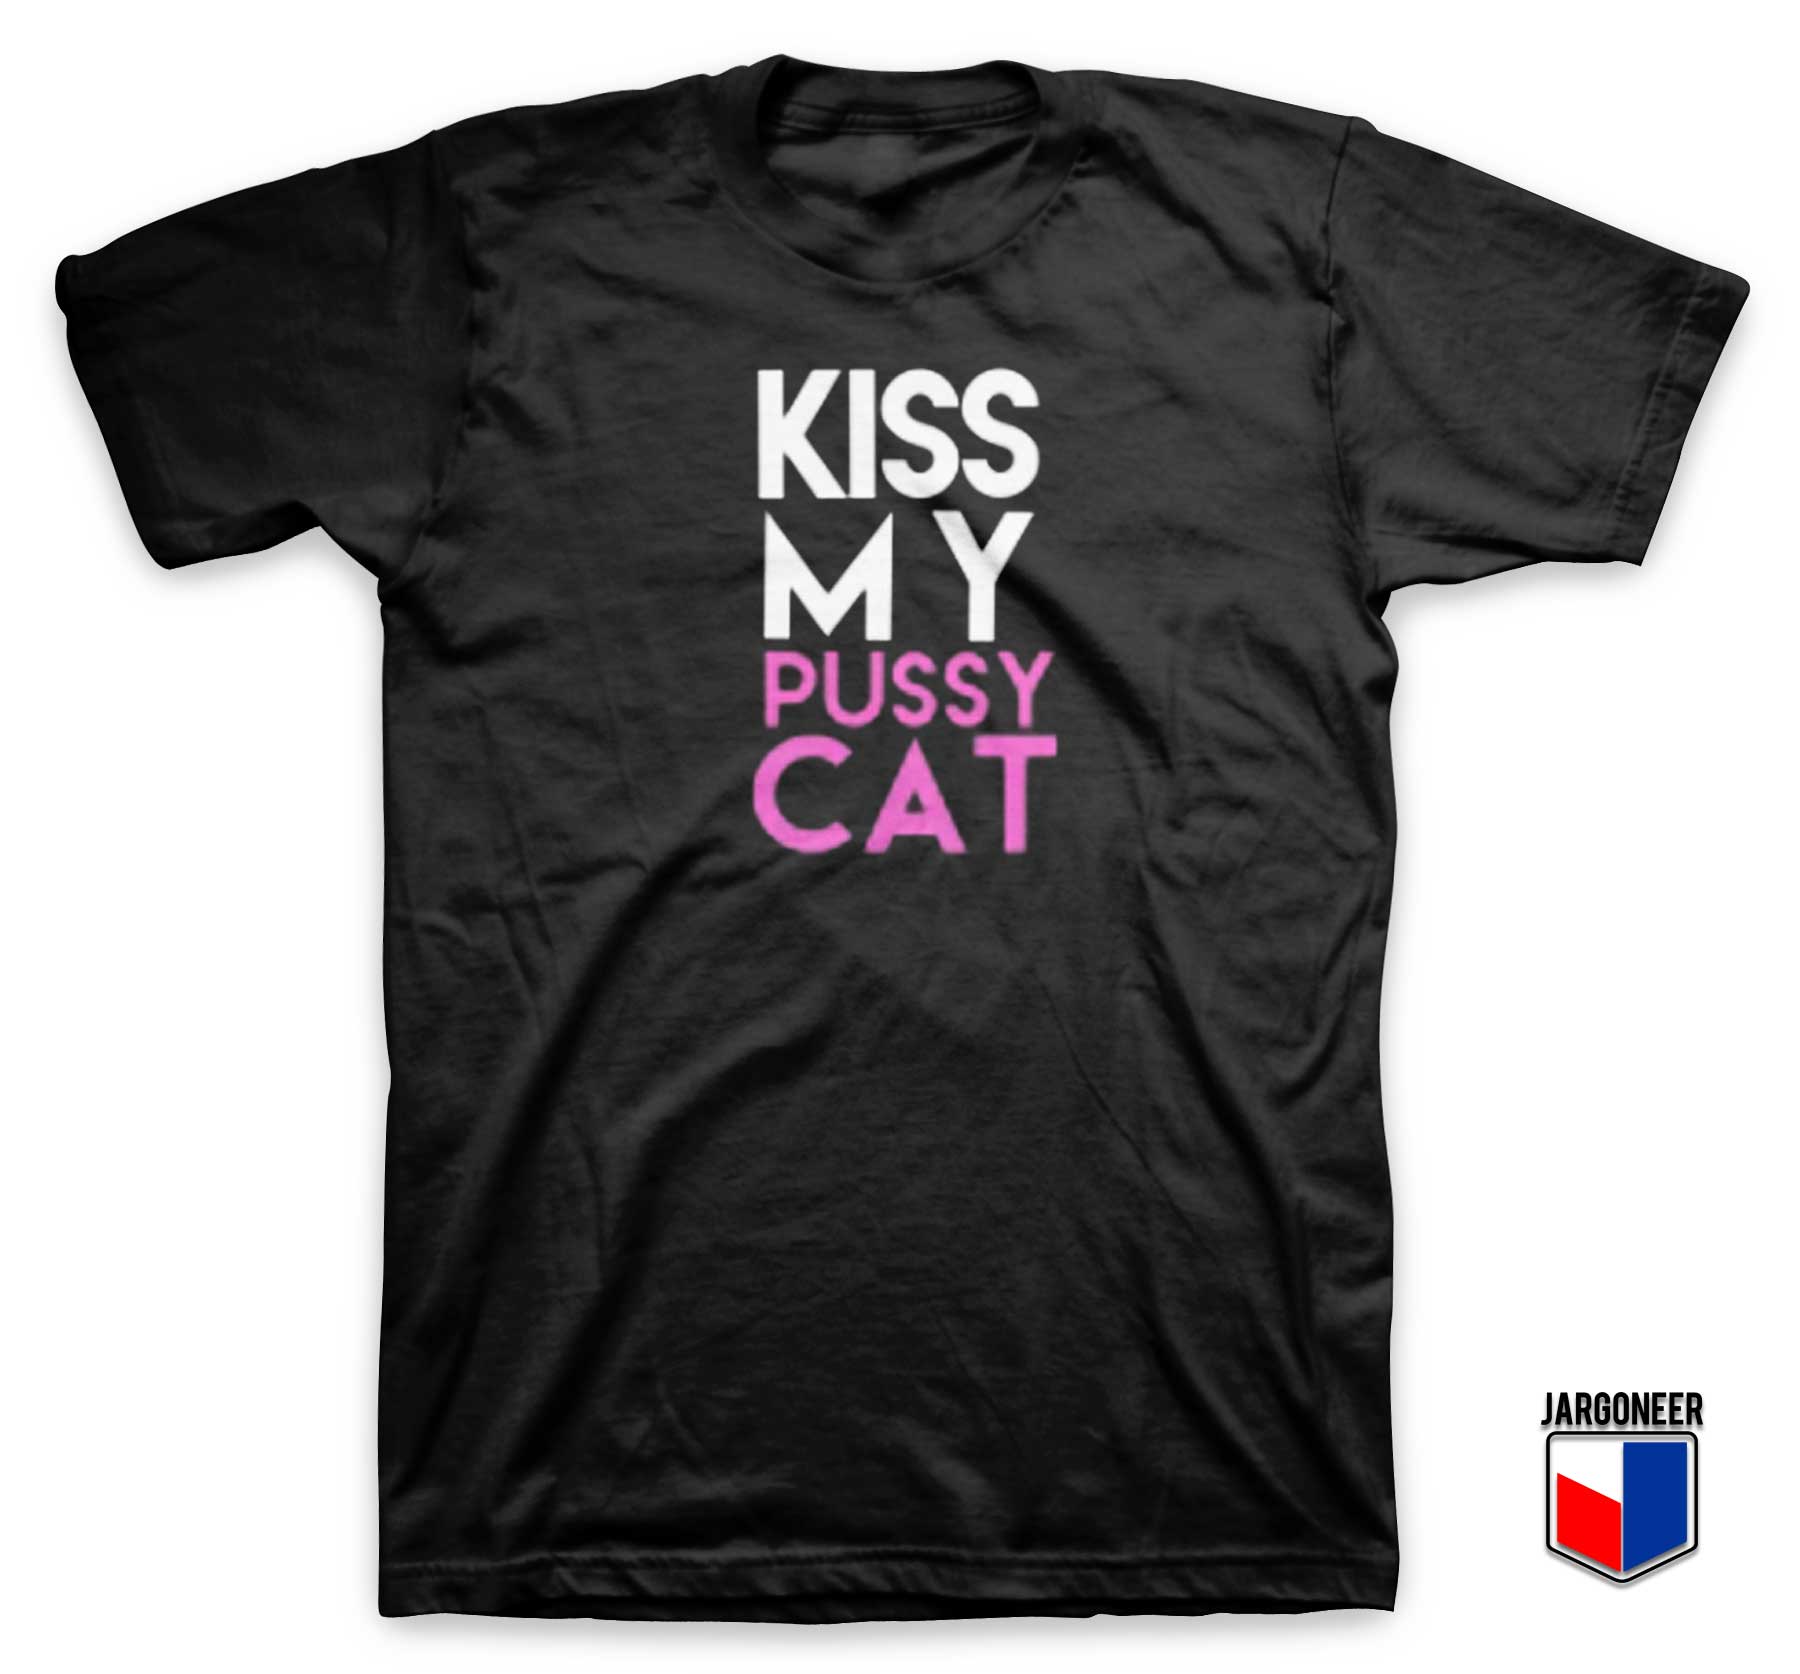 Kiss My Pussy Cat T Shirt - Shop Unique Graphic Cool Shirt Designs